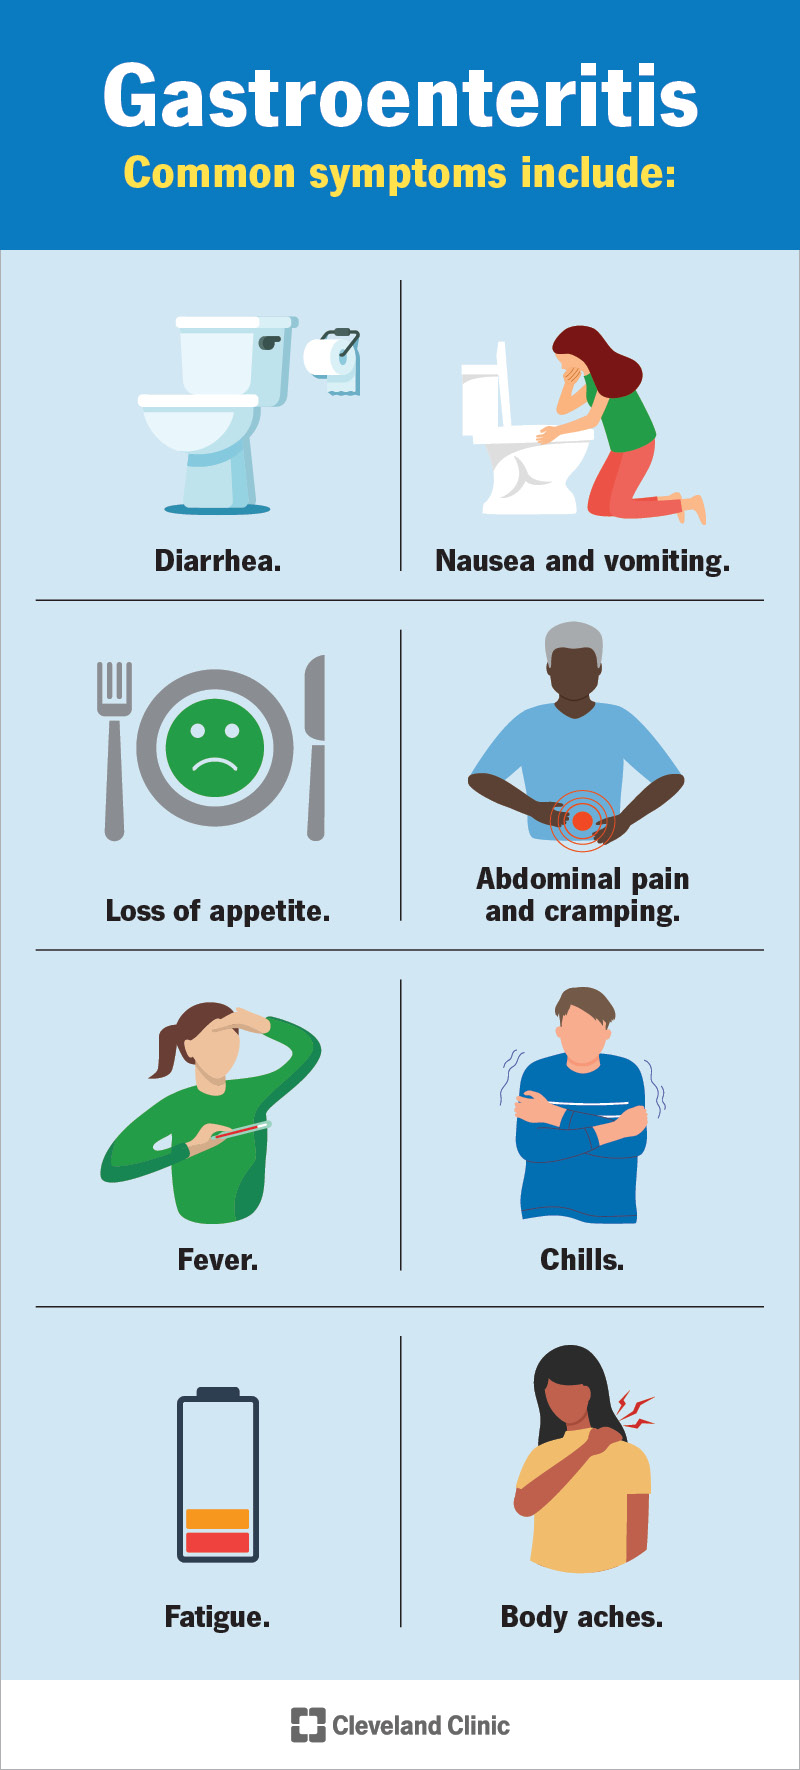 Common symptoms of gastroenteritis include diarrhea, nausea and vomiting.